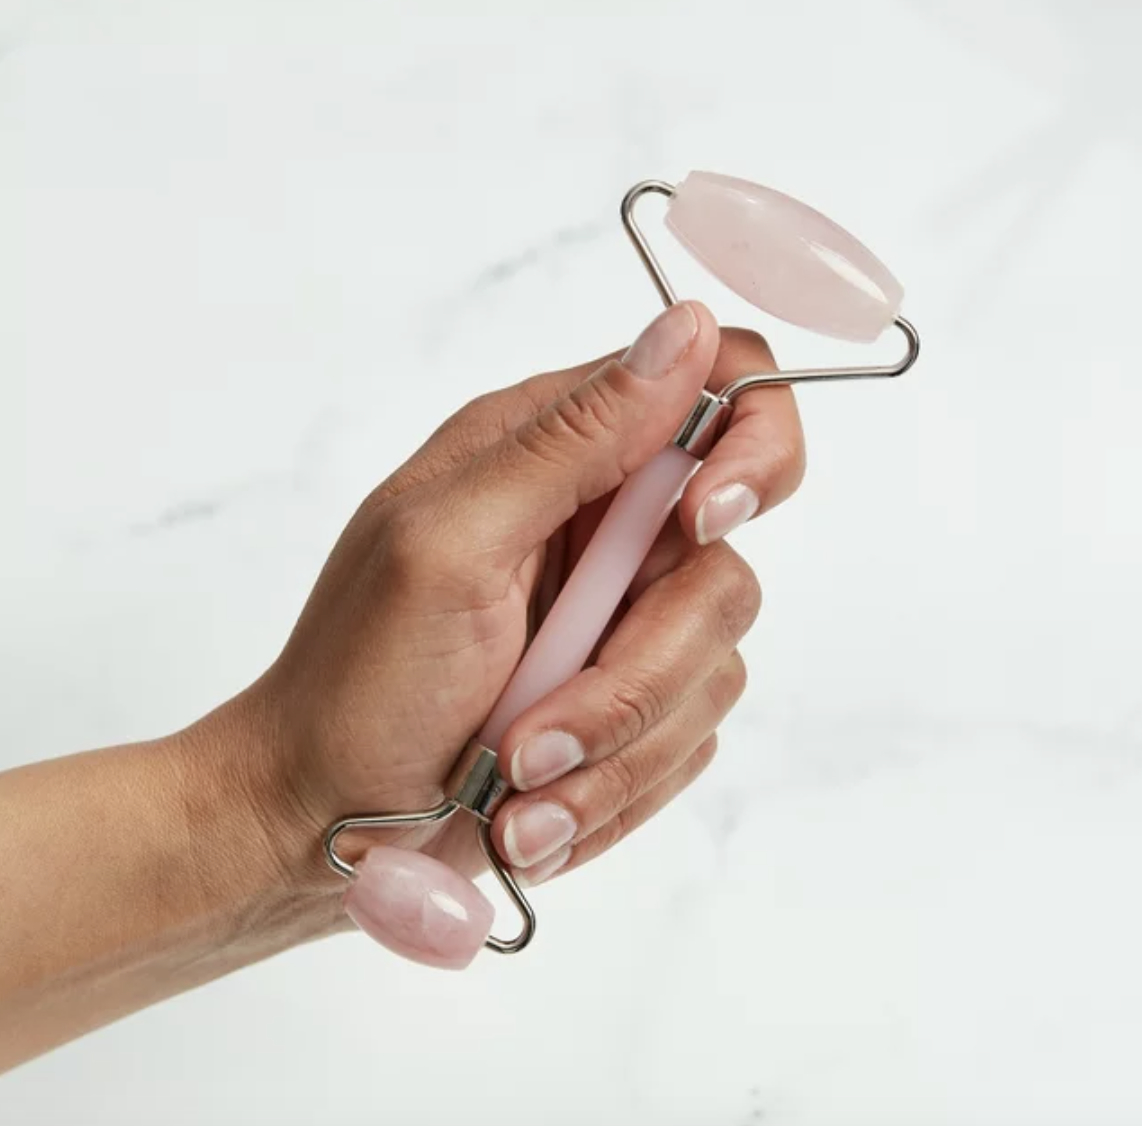 Hand holding a rose quartz facial roller against a white background